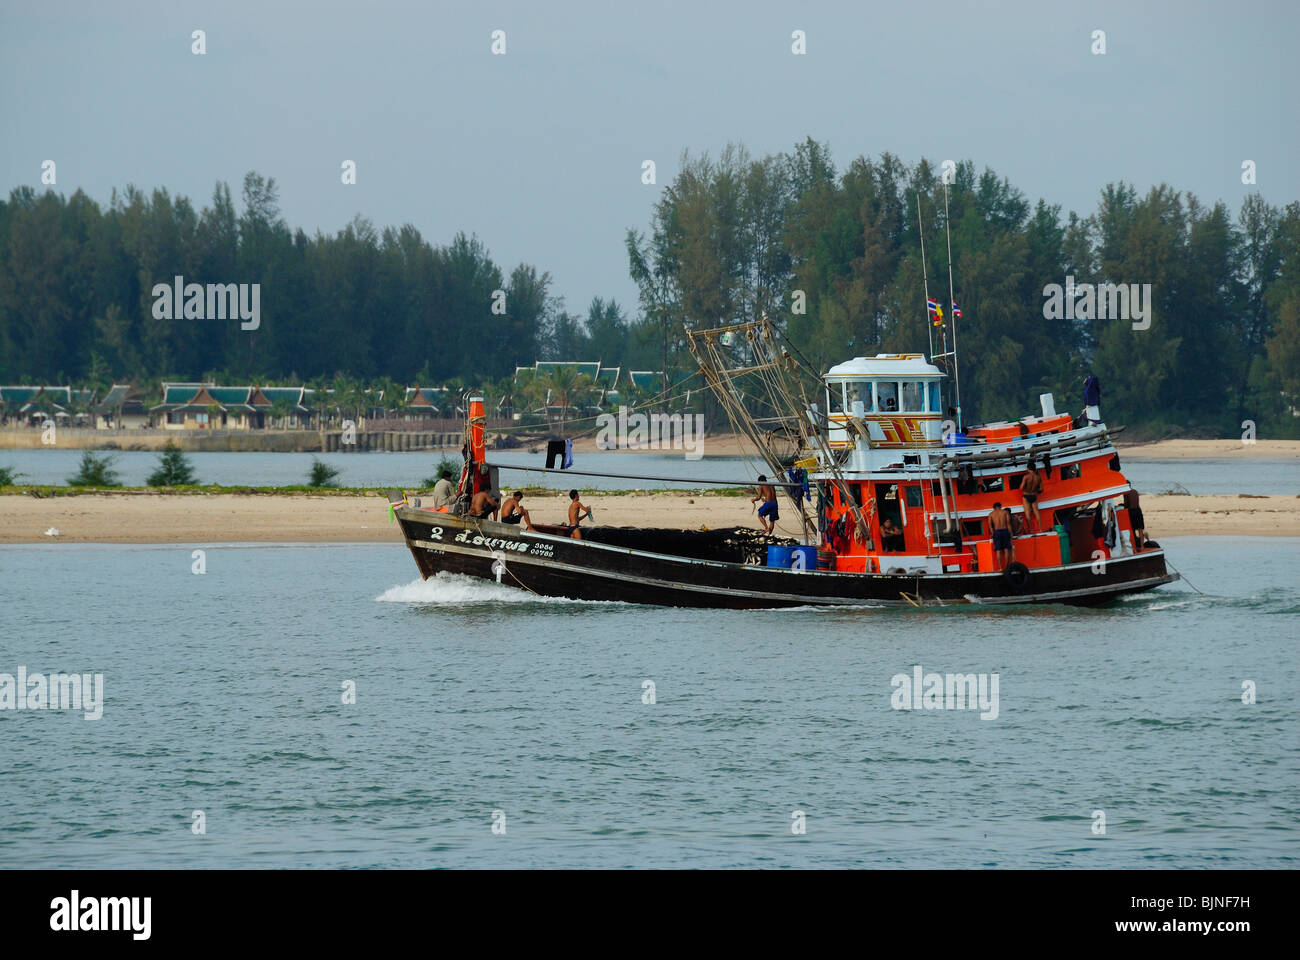 Wooden fishing boat leaving harbor of Ban Nam Khem, Thailand Stock Photo